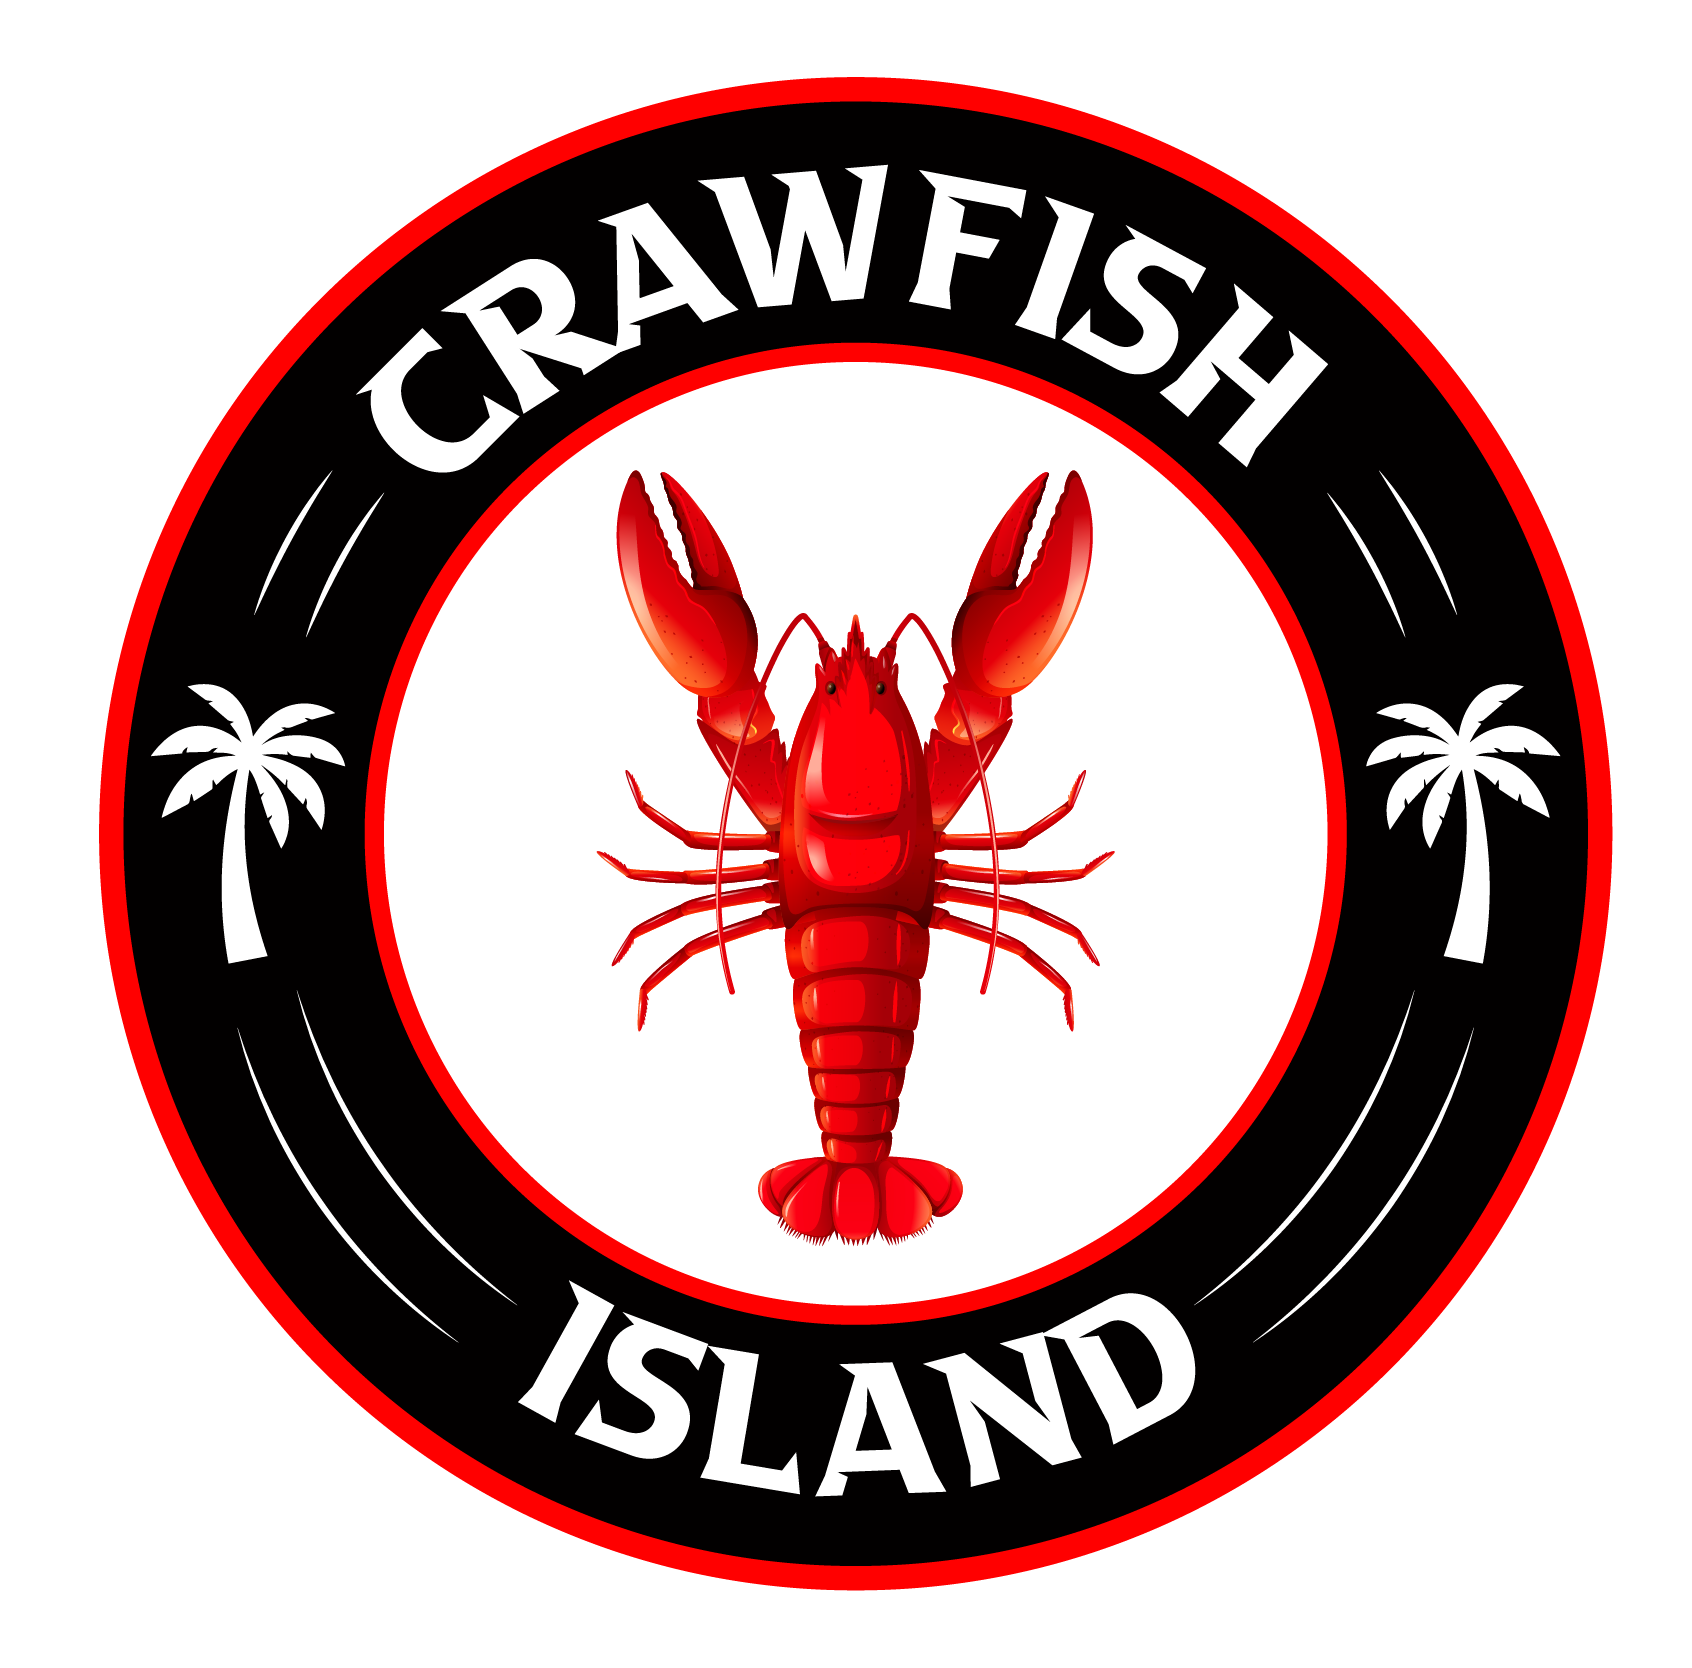 Crawfish Island